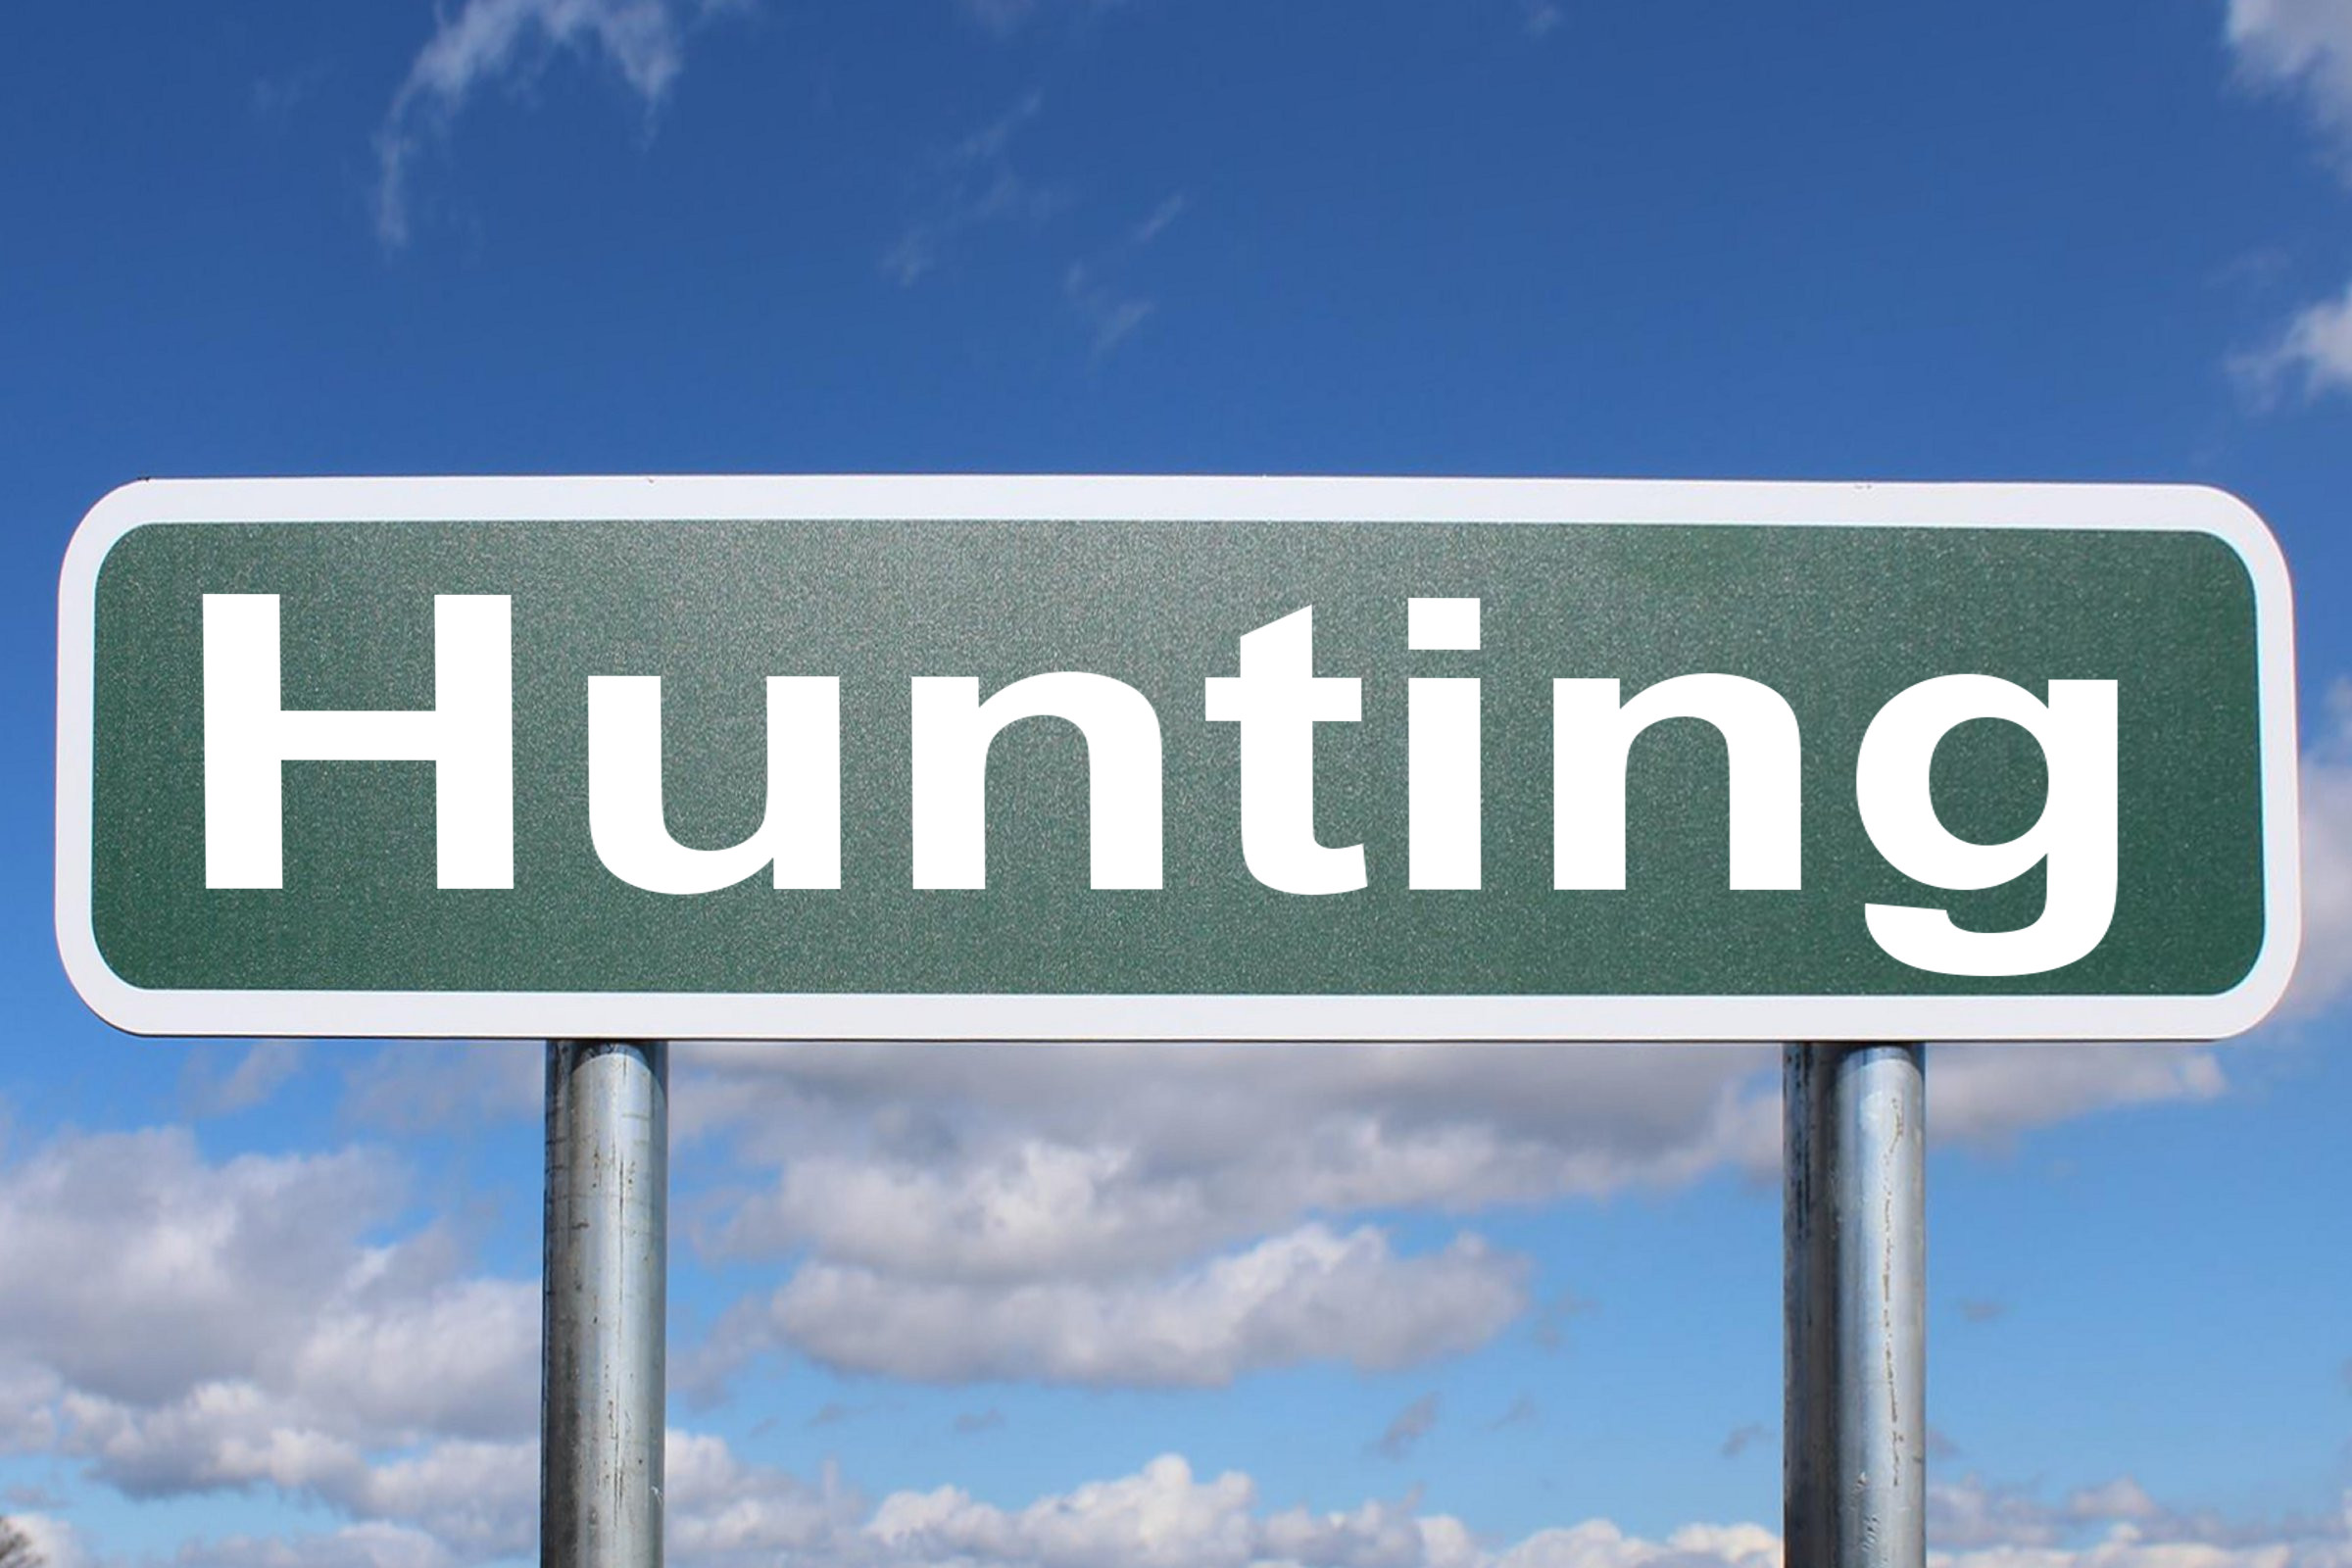 hunting